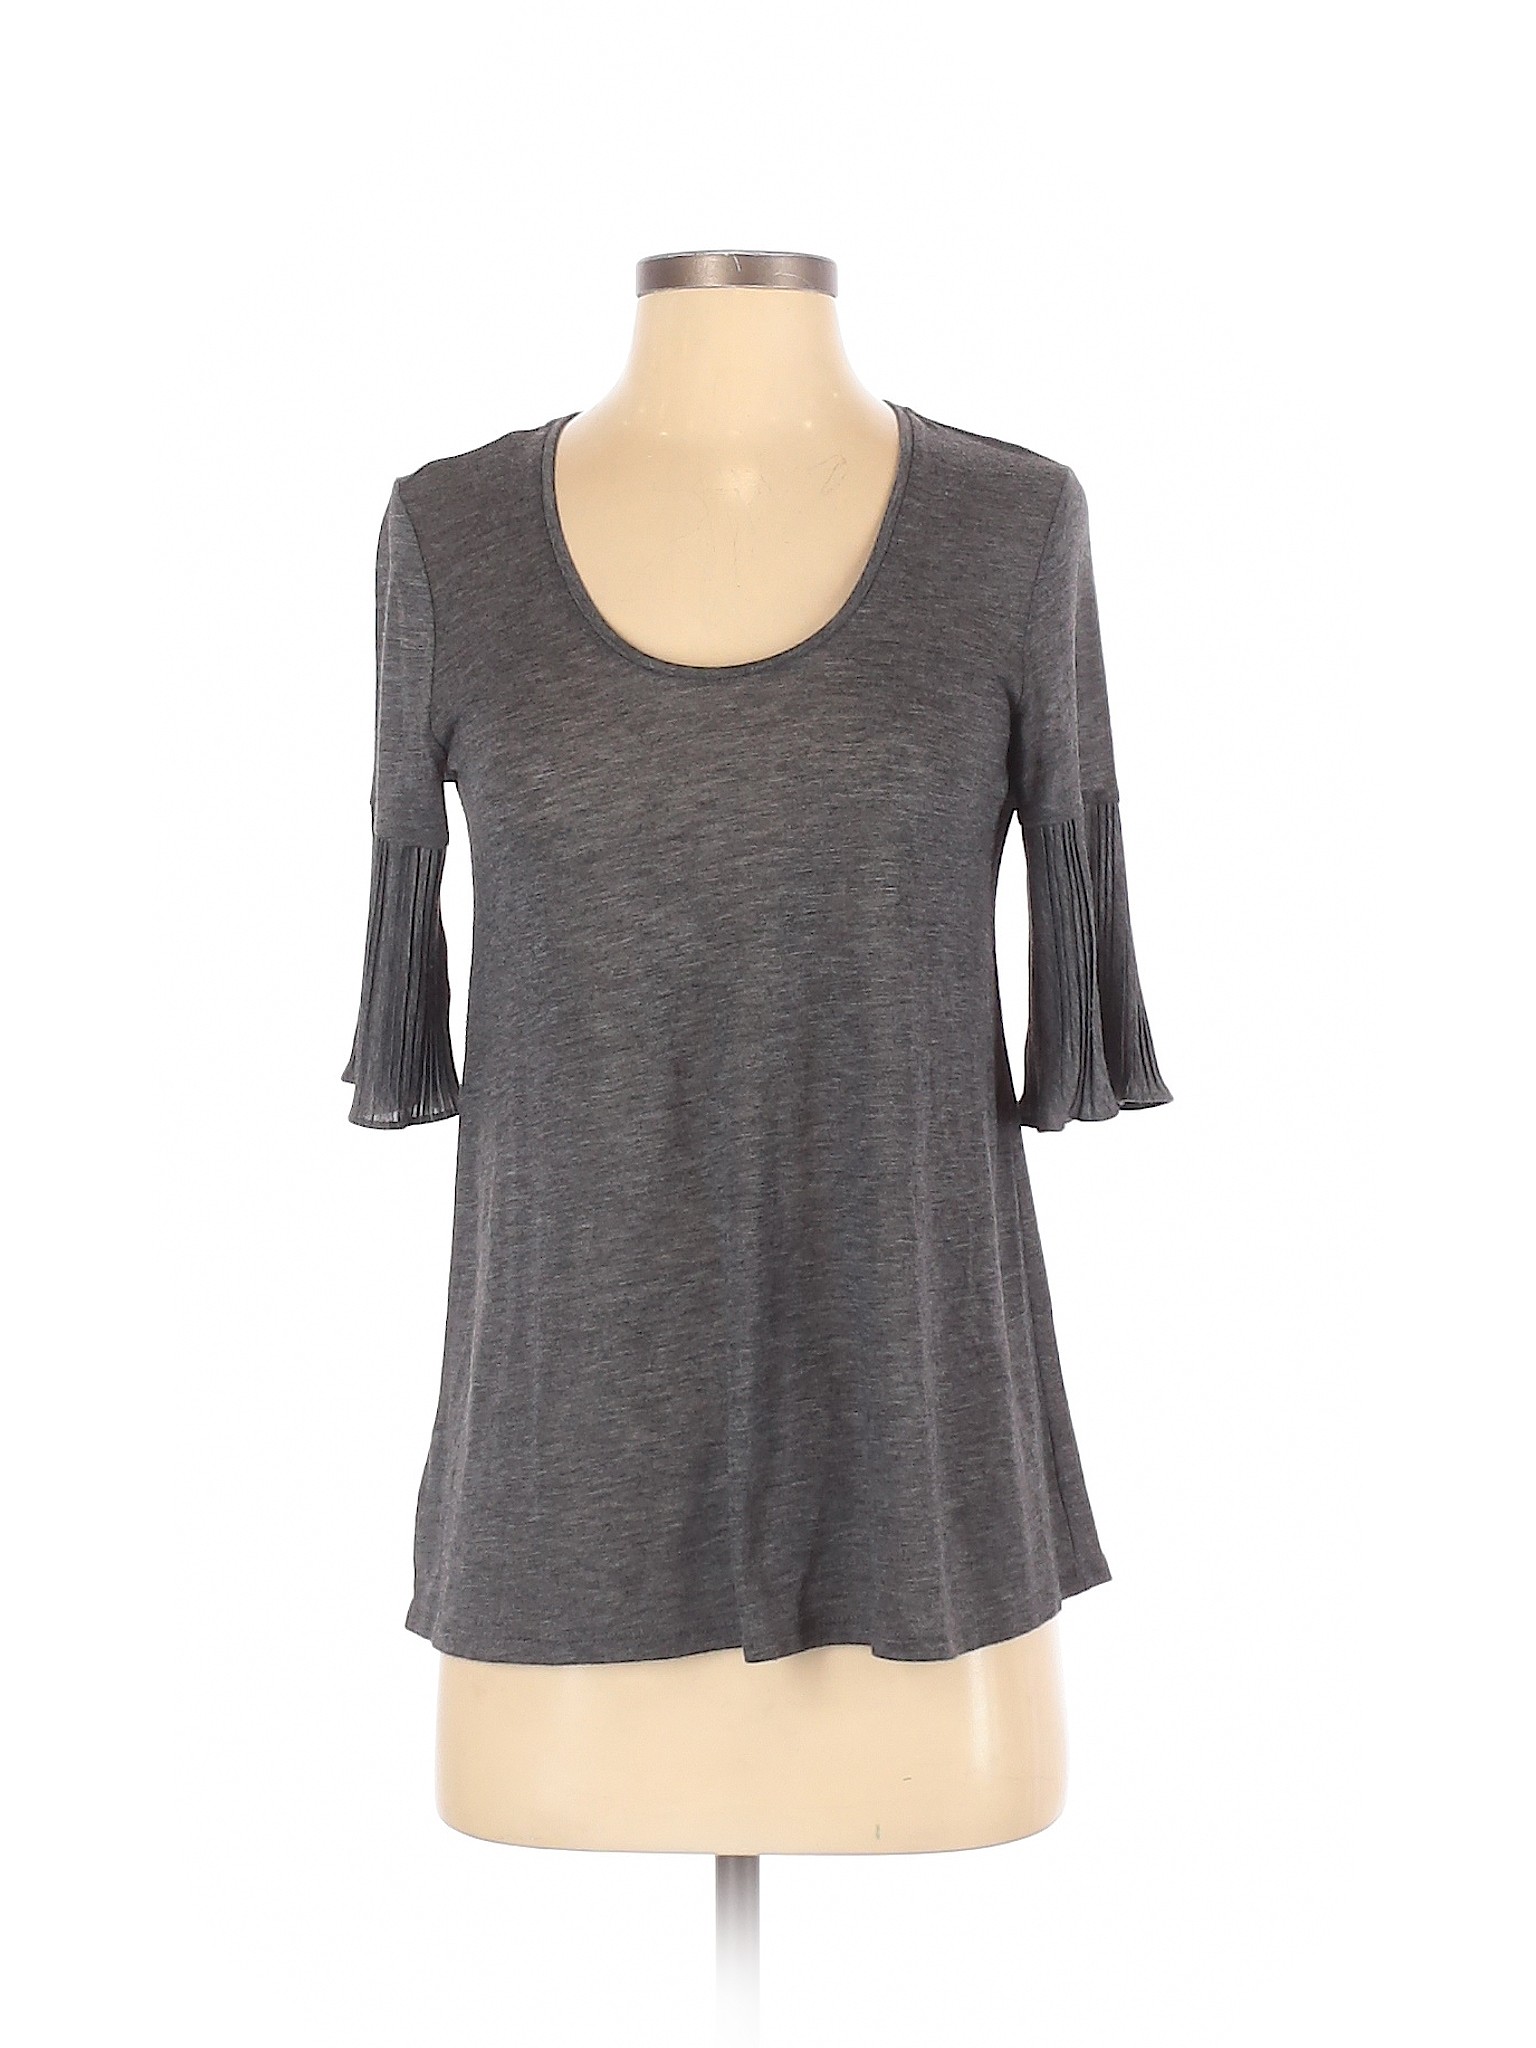 Ann Taylor LOFT Women Gray 3/4 Sleeve T-Shirt XS | eBay